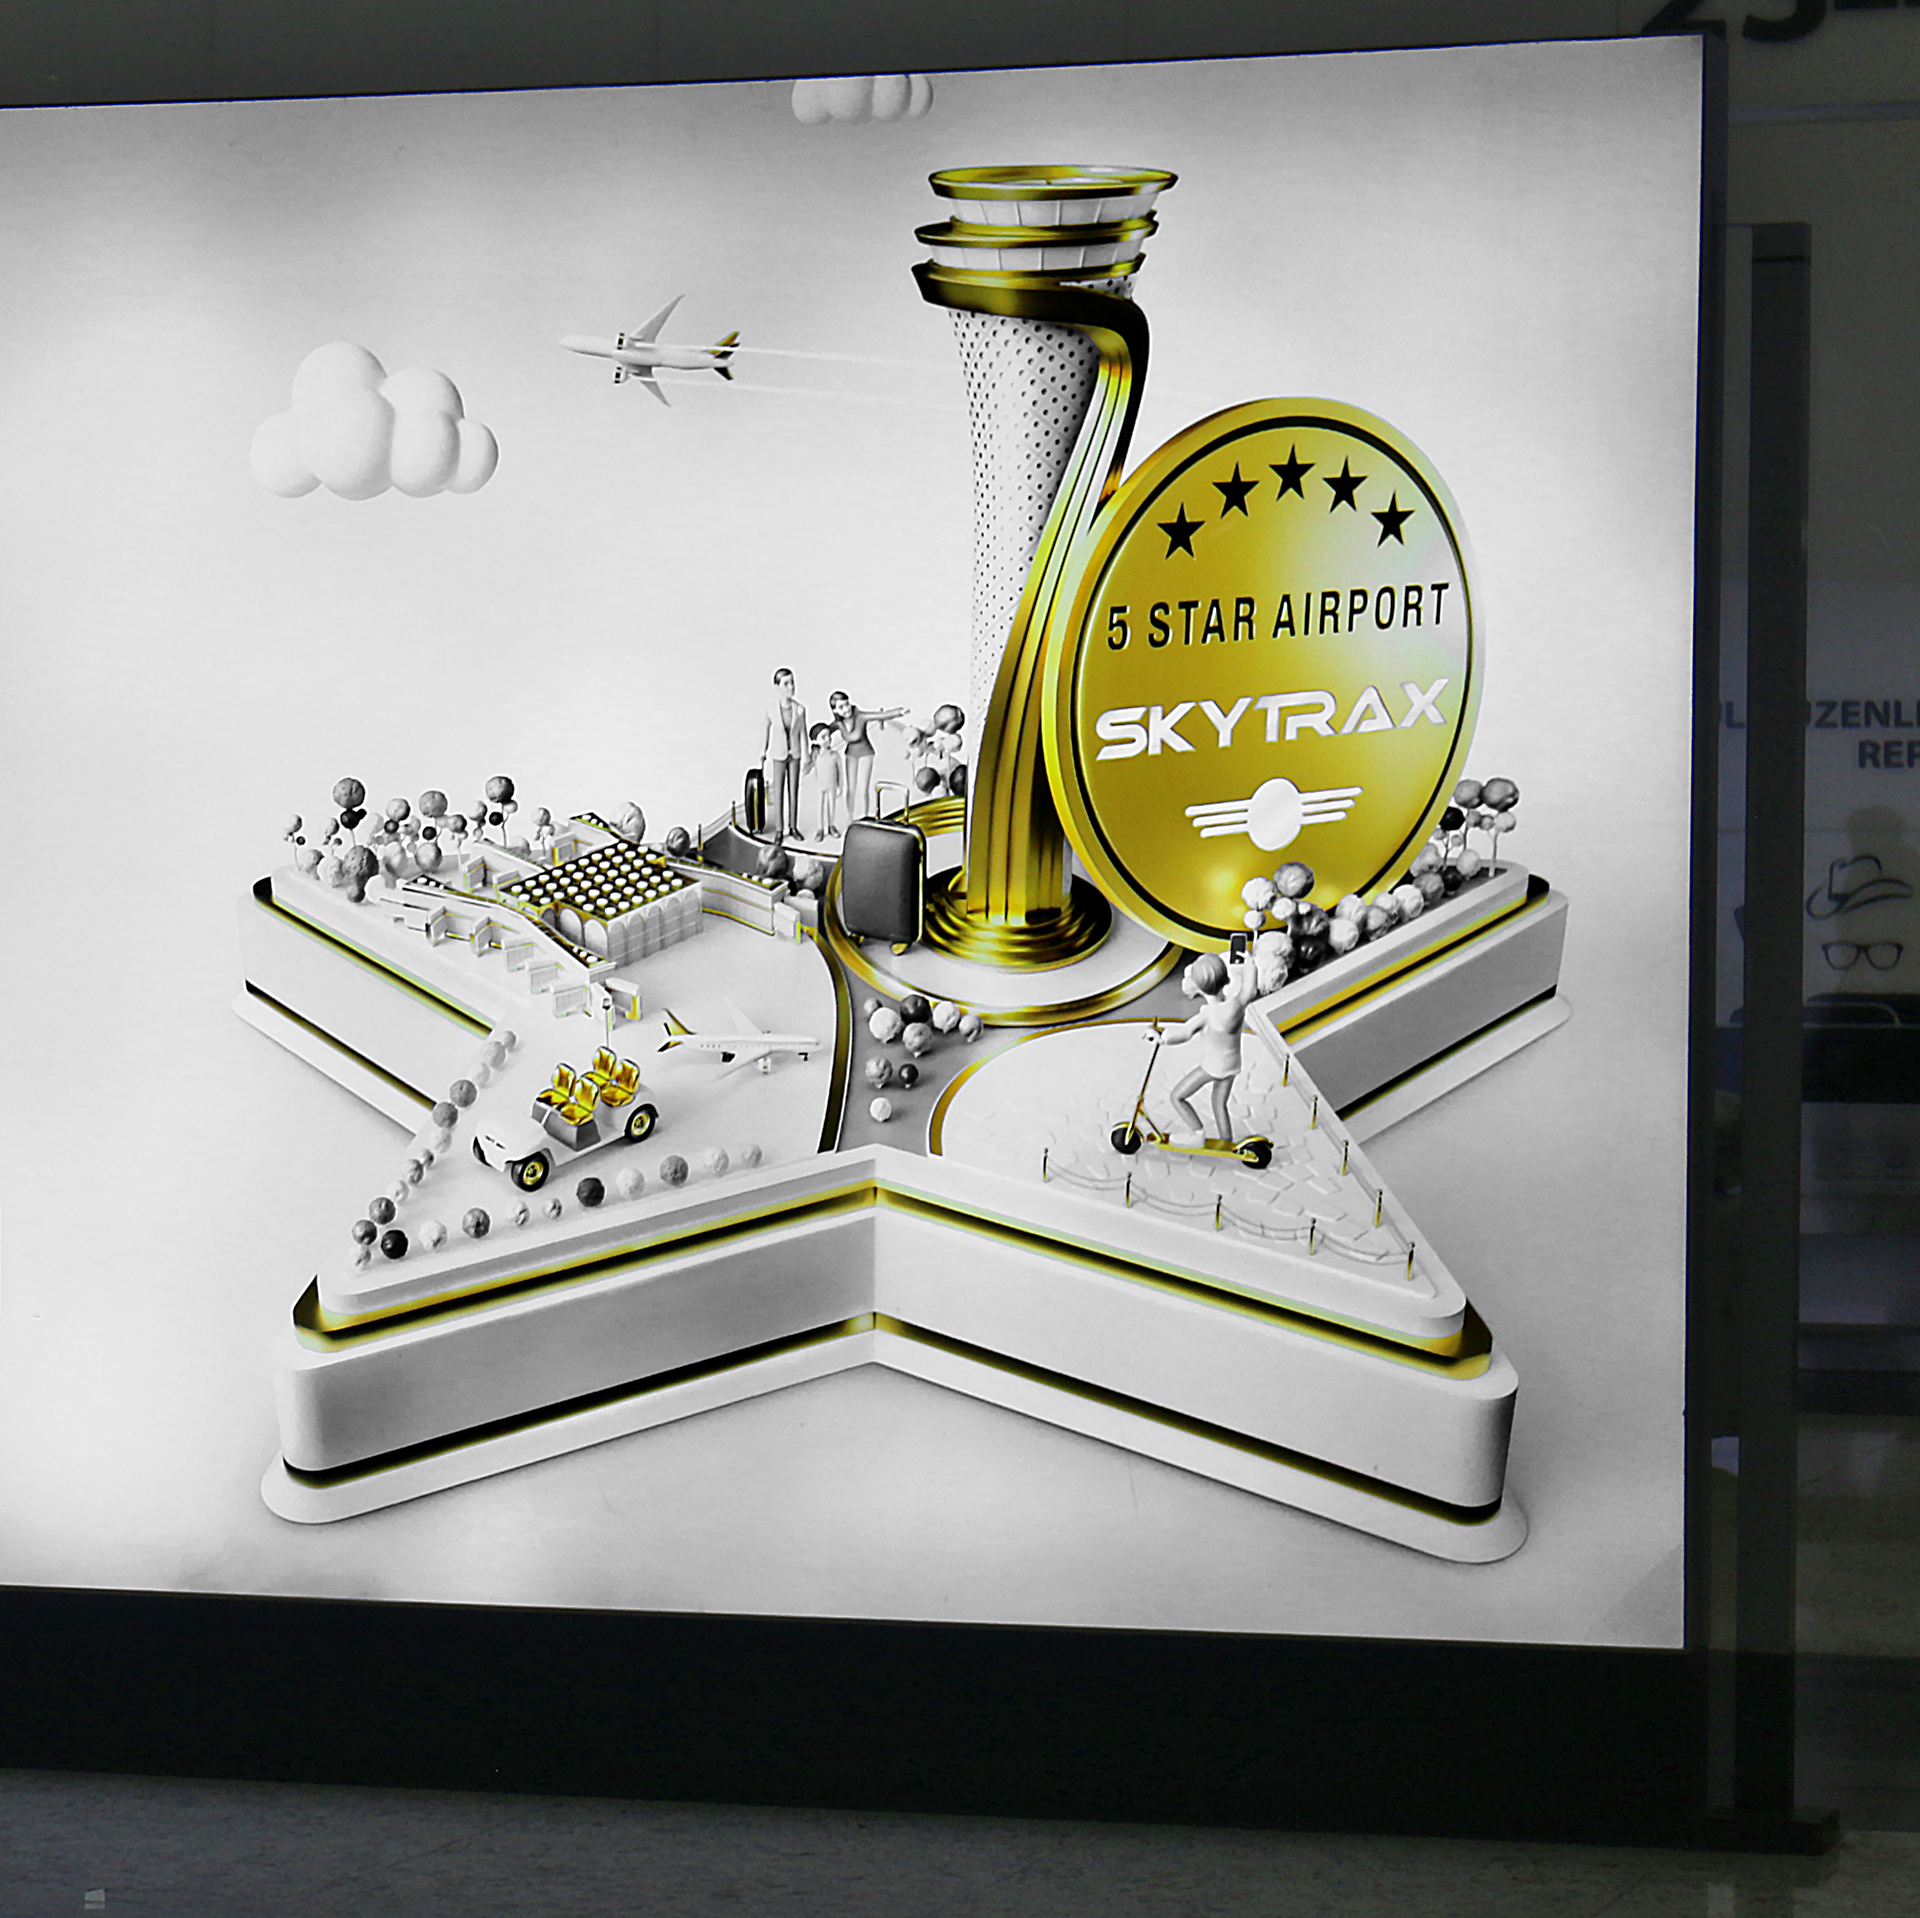 Skytrax Award Istanbul Airport